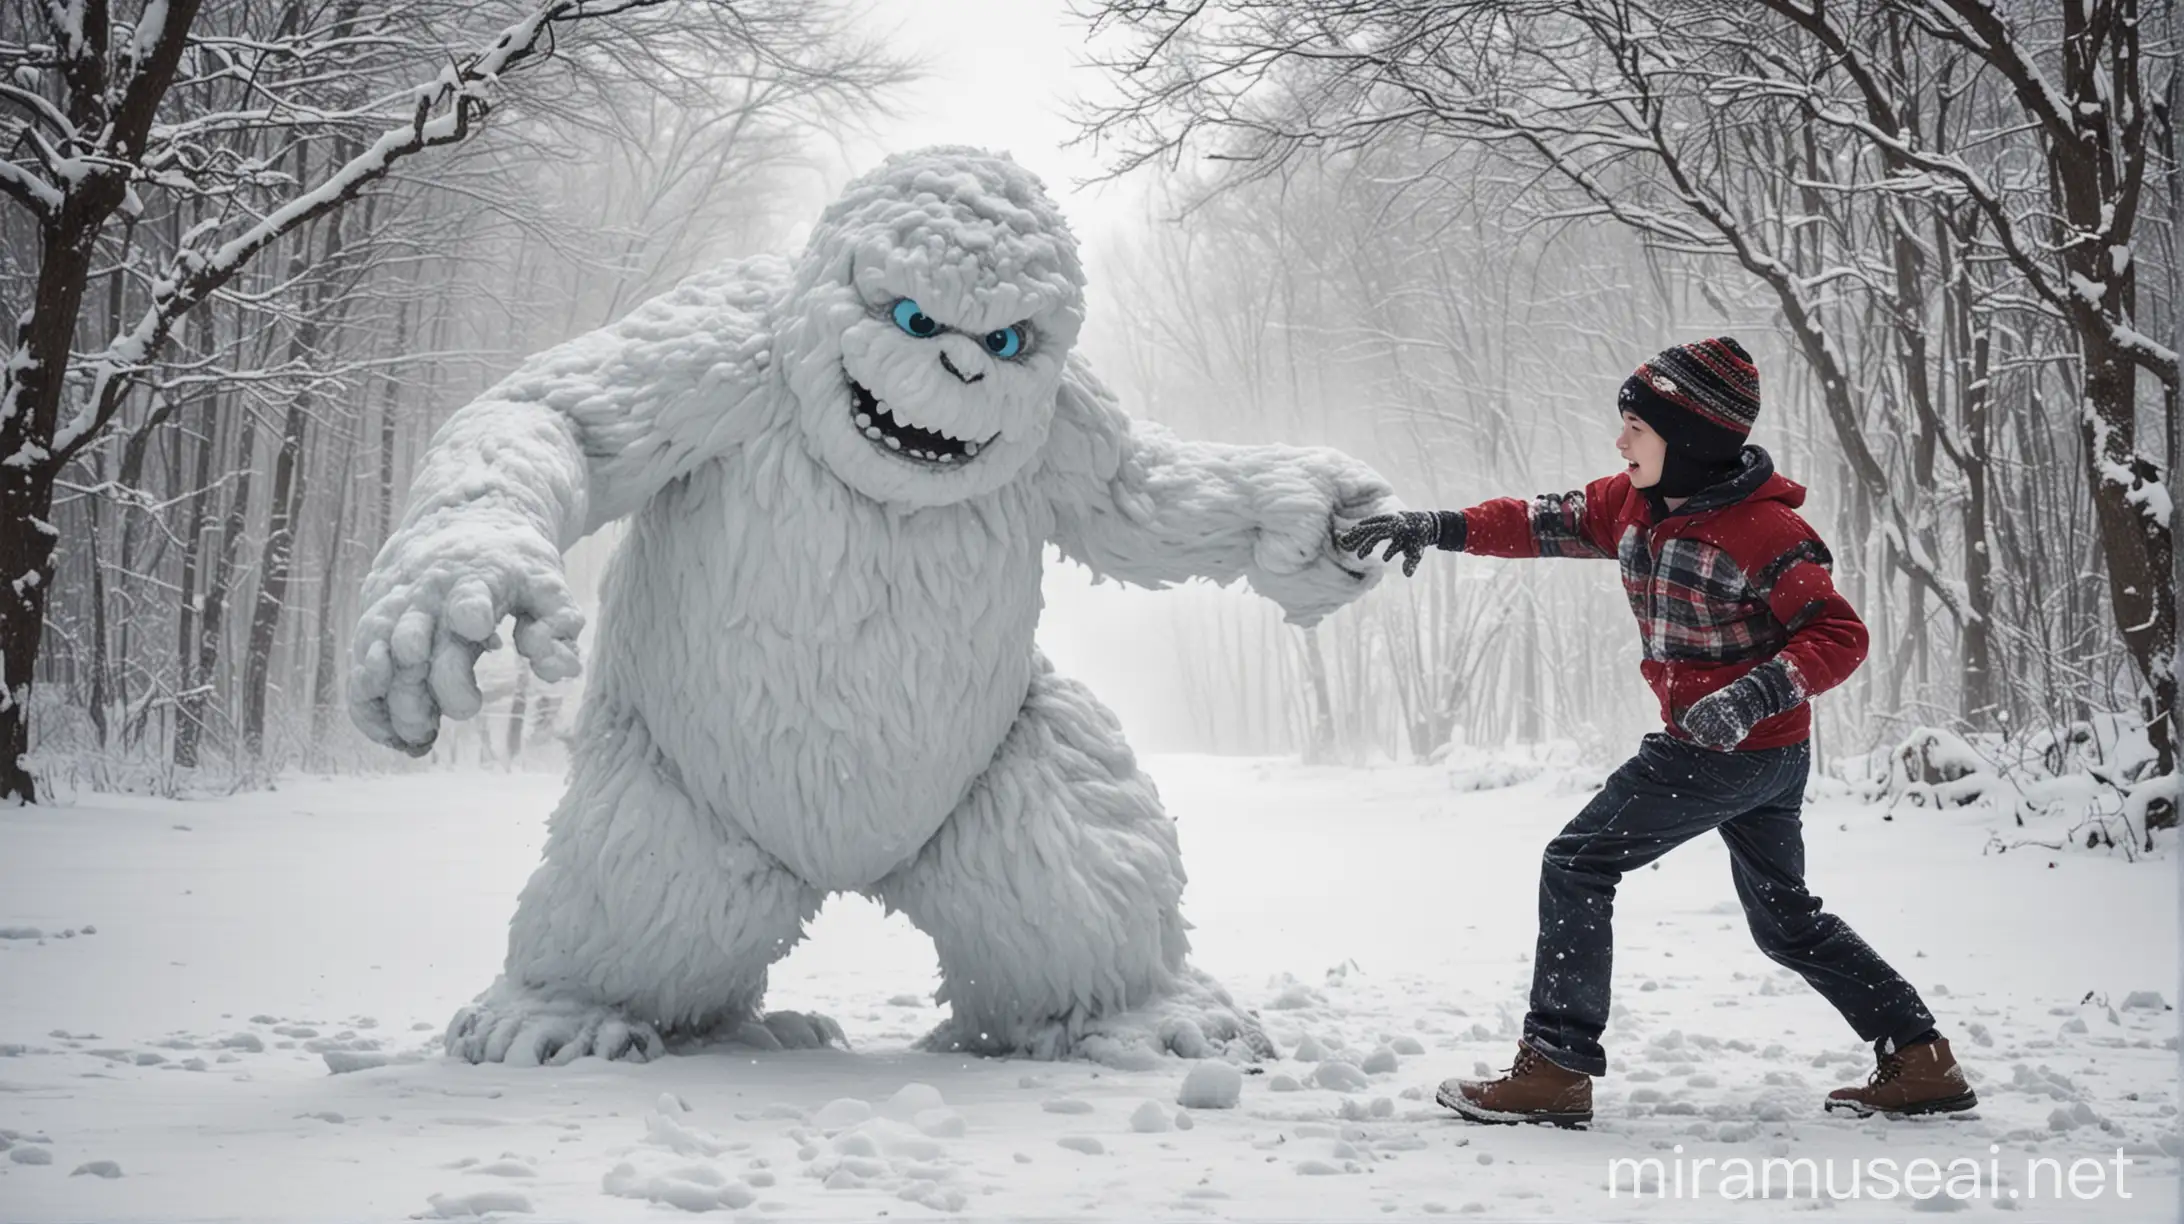 Brave Boy Battling a Snow Monster in Winter Wonderland